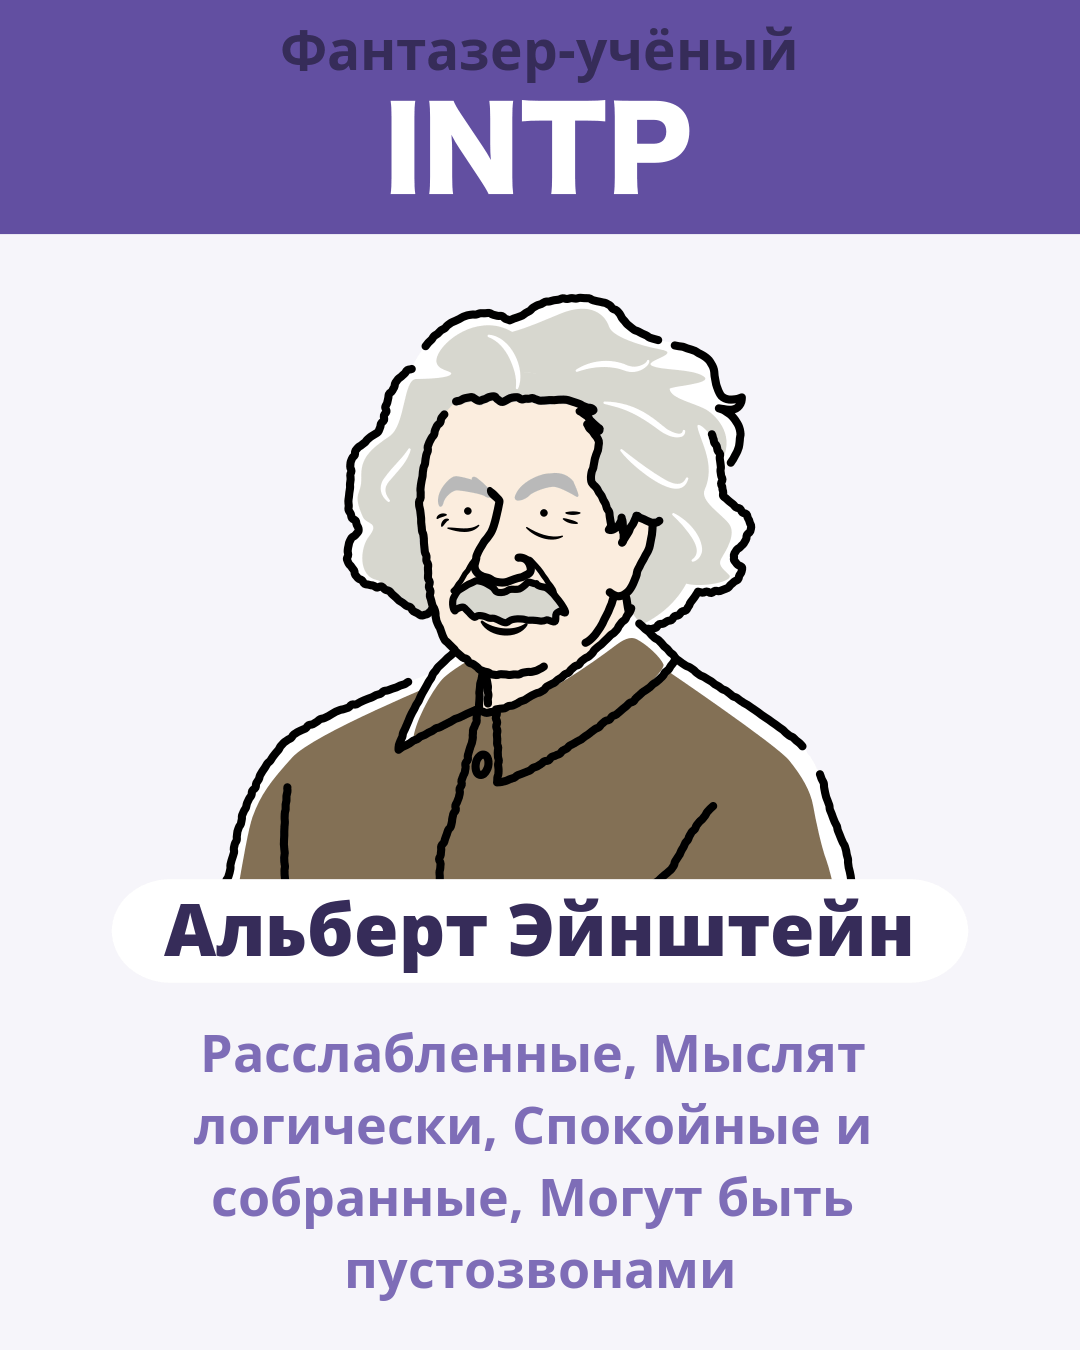 Альберт Эйнштейн - INTP